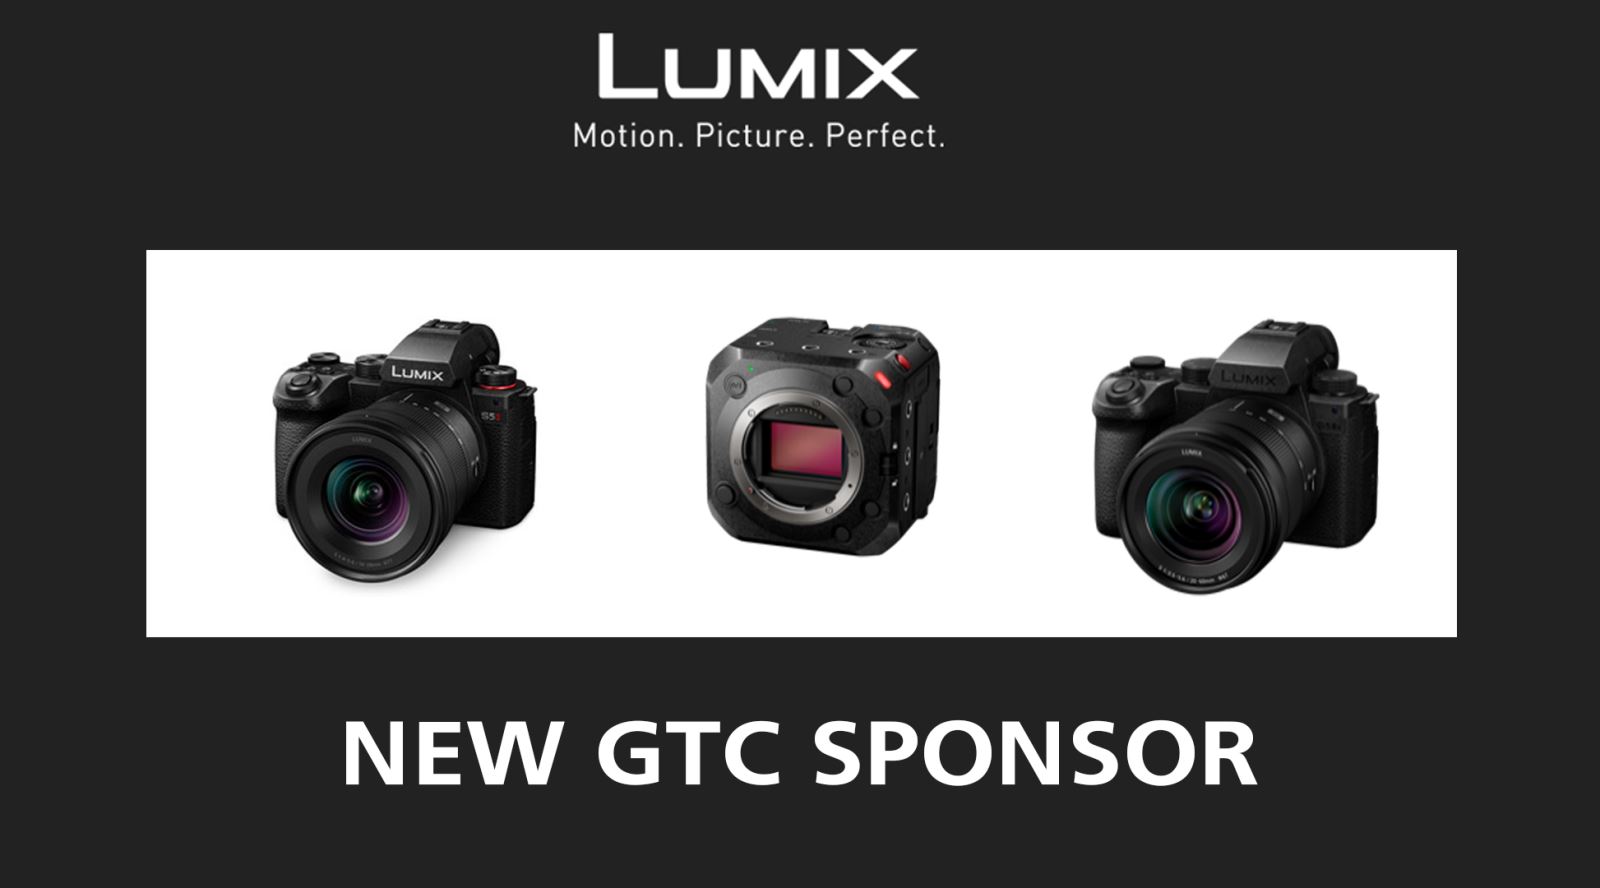 LUMIX new GTC sponsor